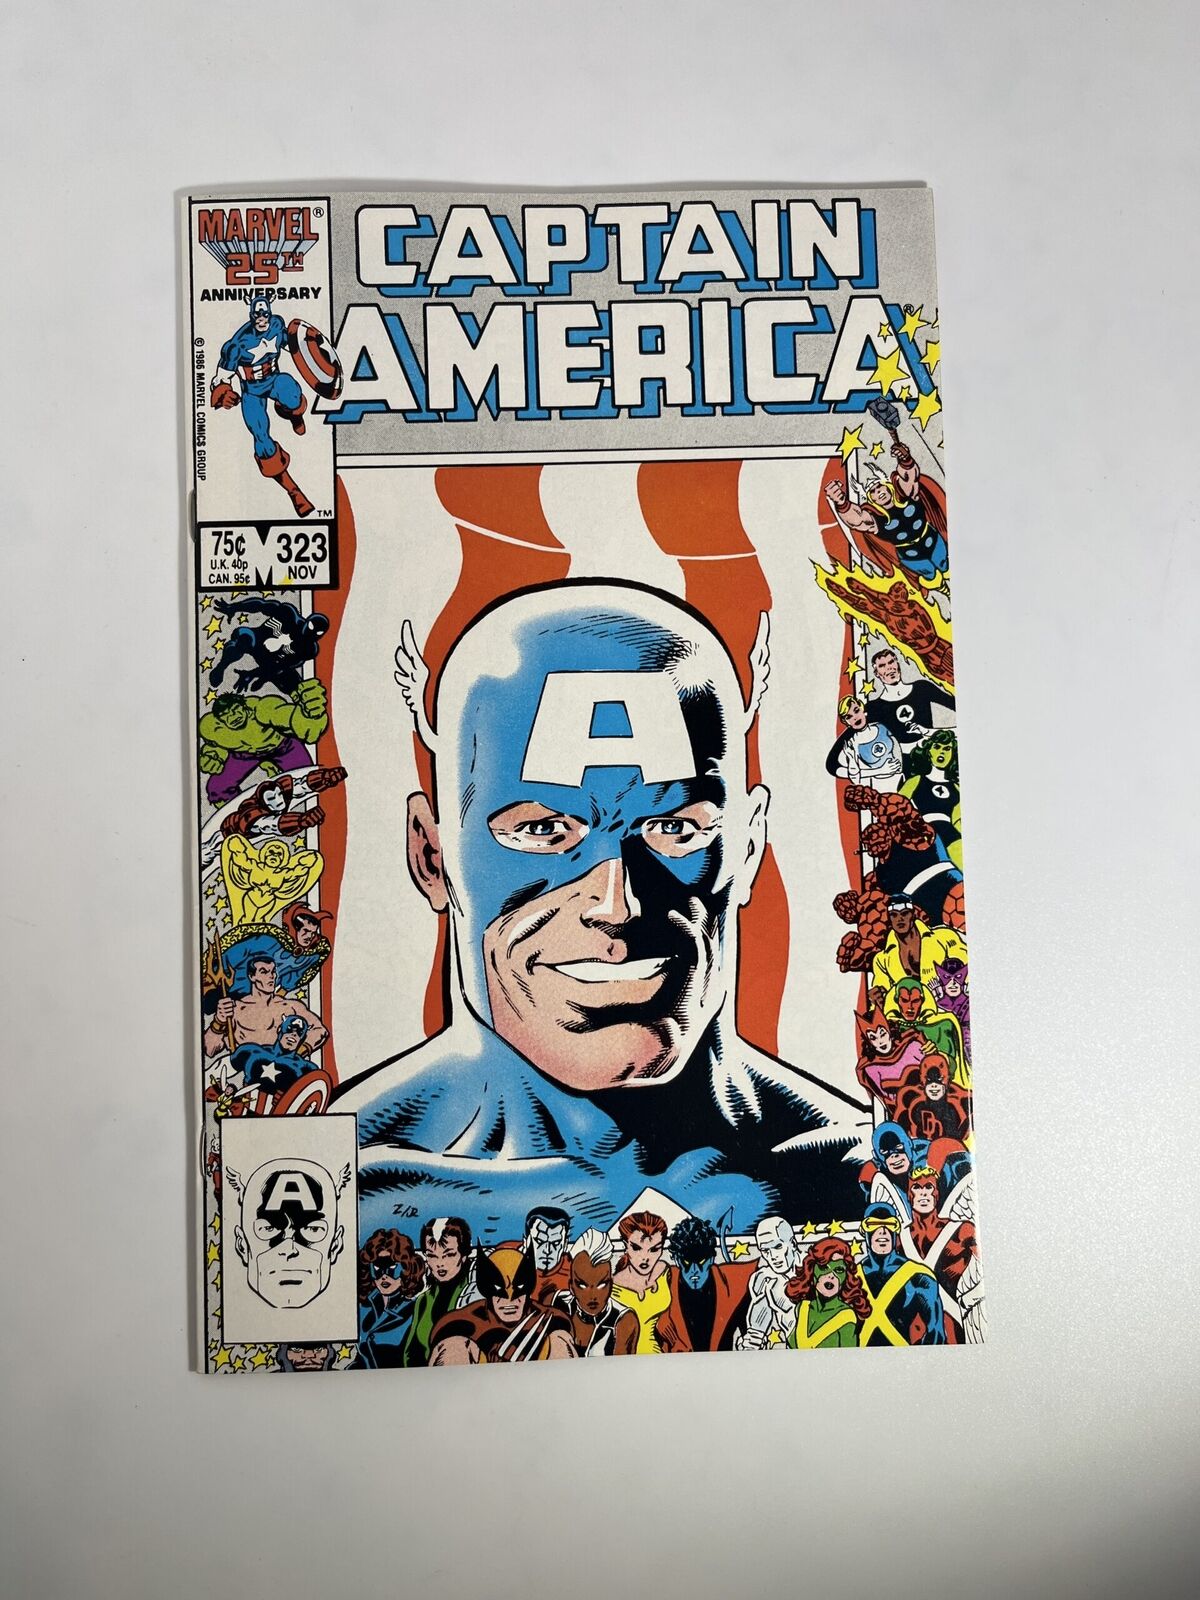 Captain America #323 (1986) in 9.6 Near Mint+